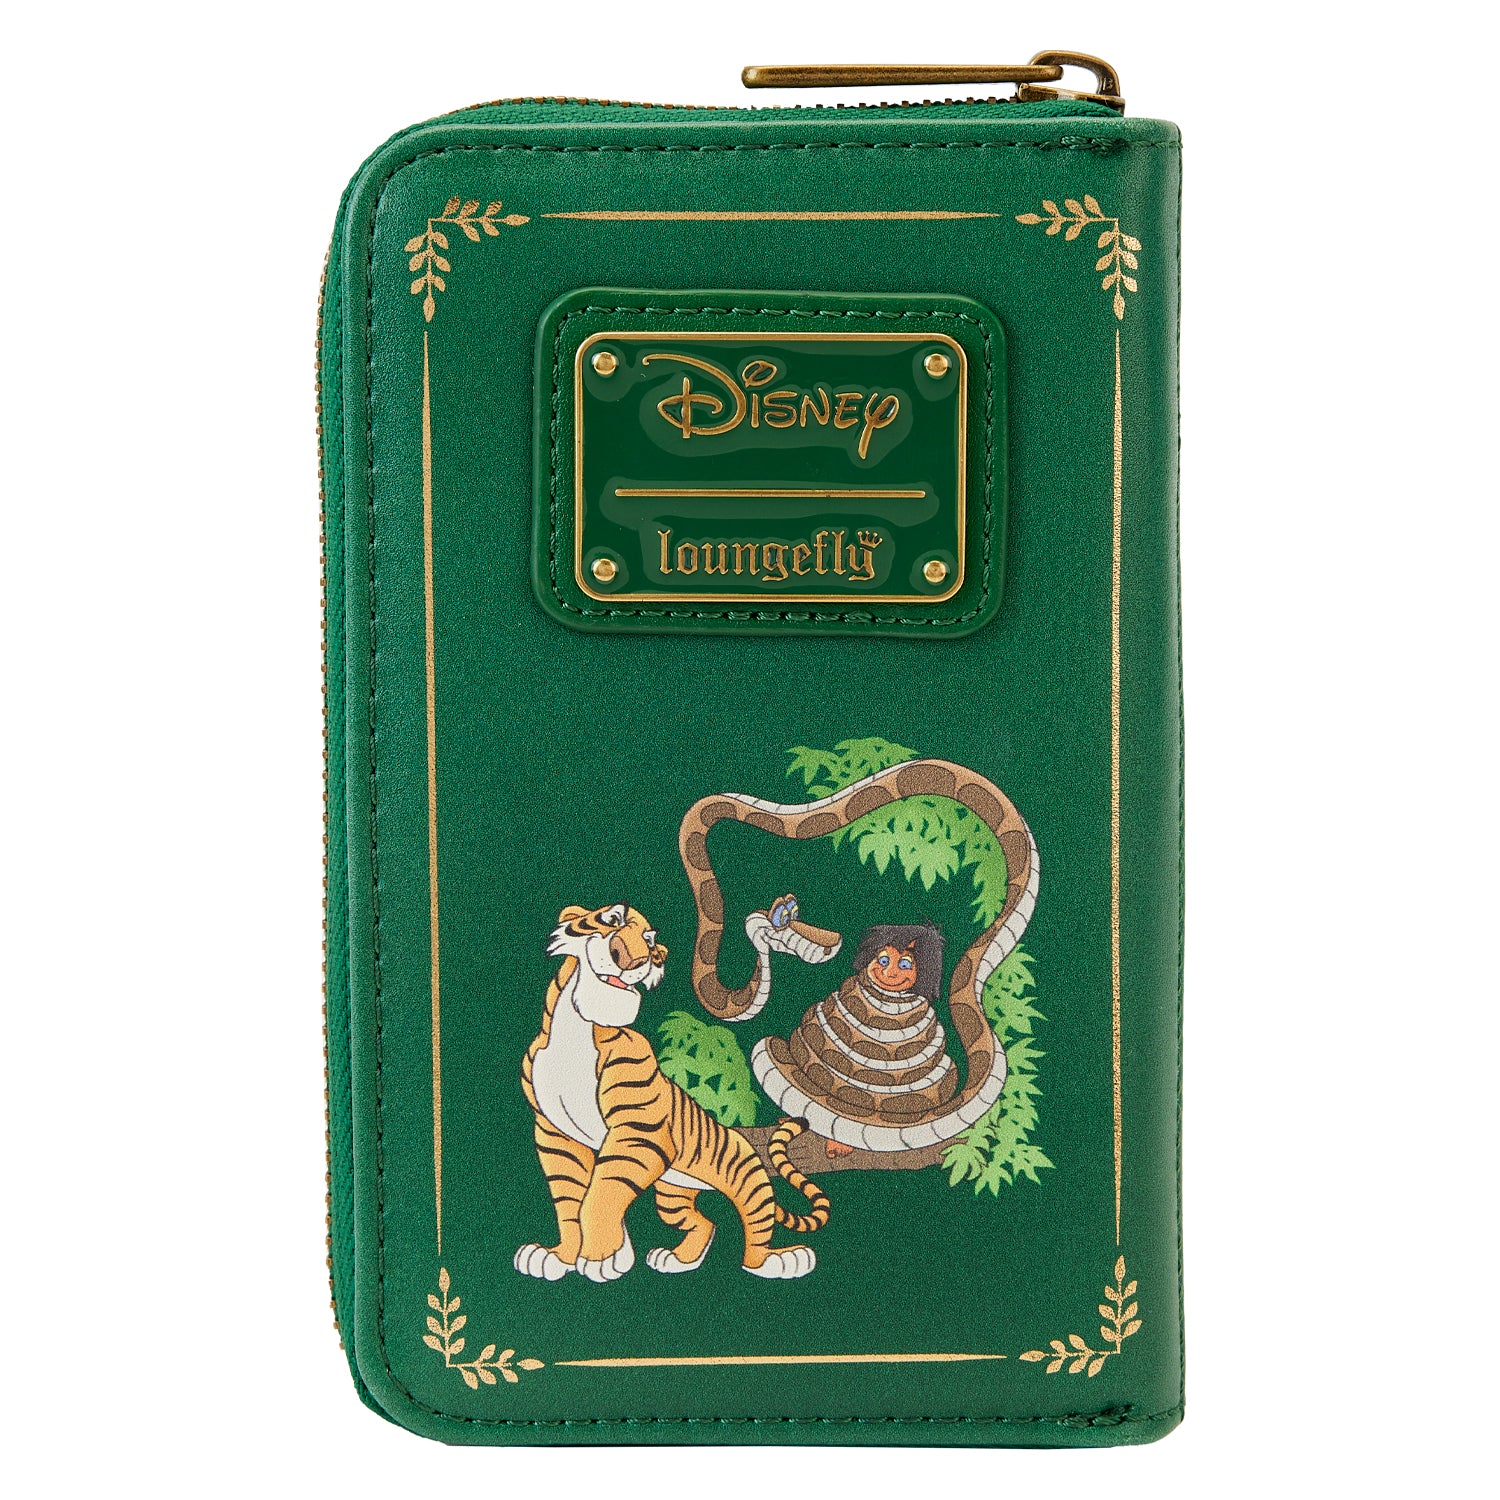 Disney | Jungle Book Classic Books Zip Around Wallet